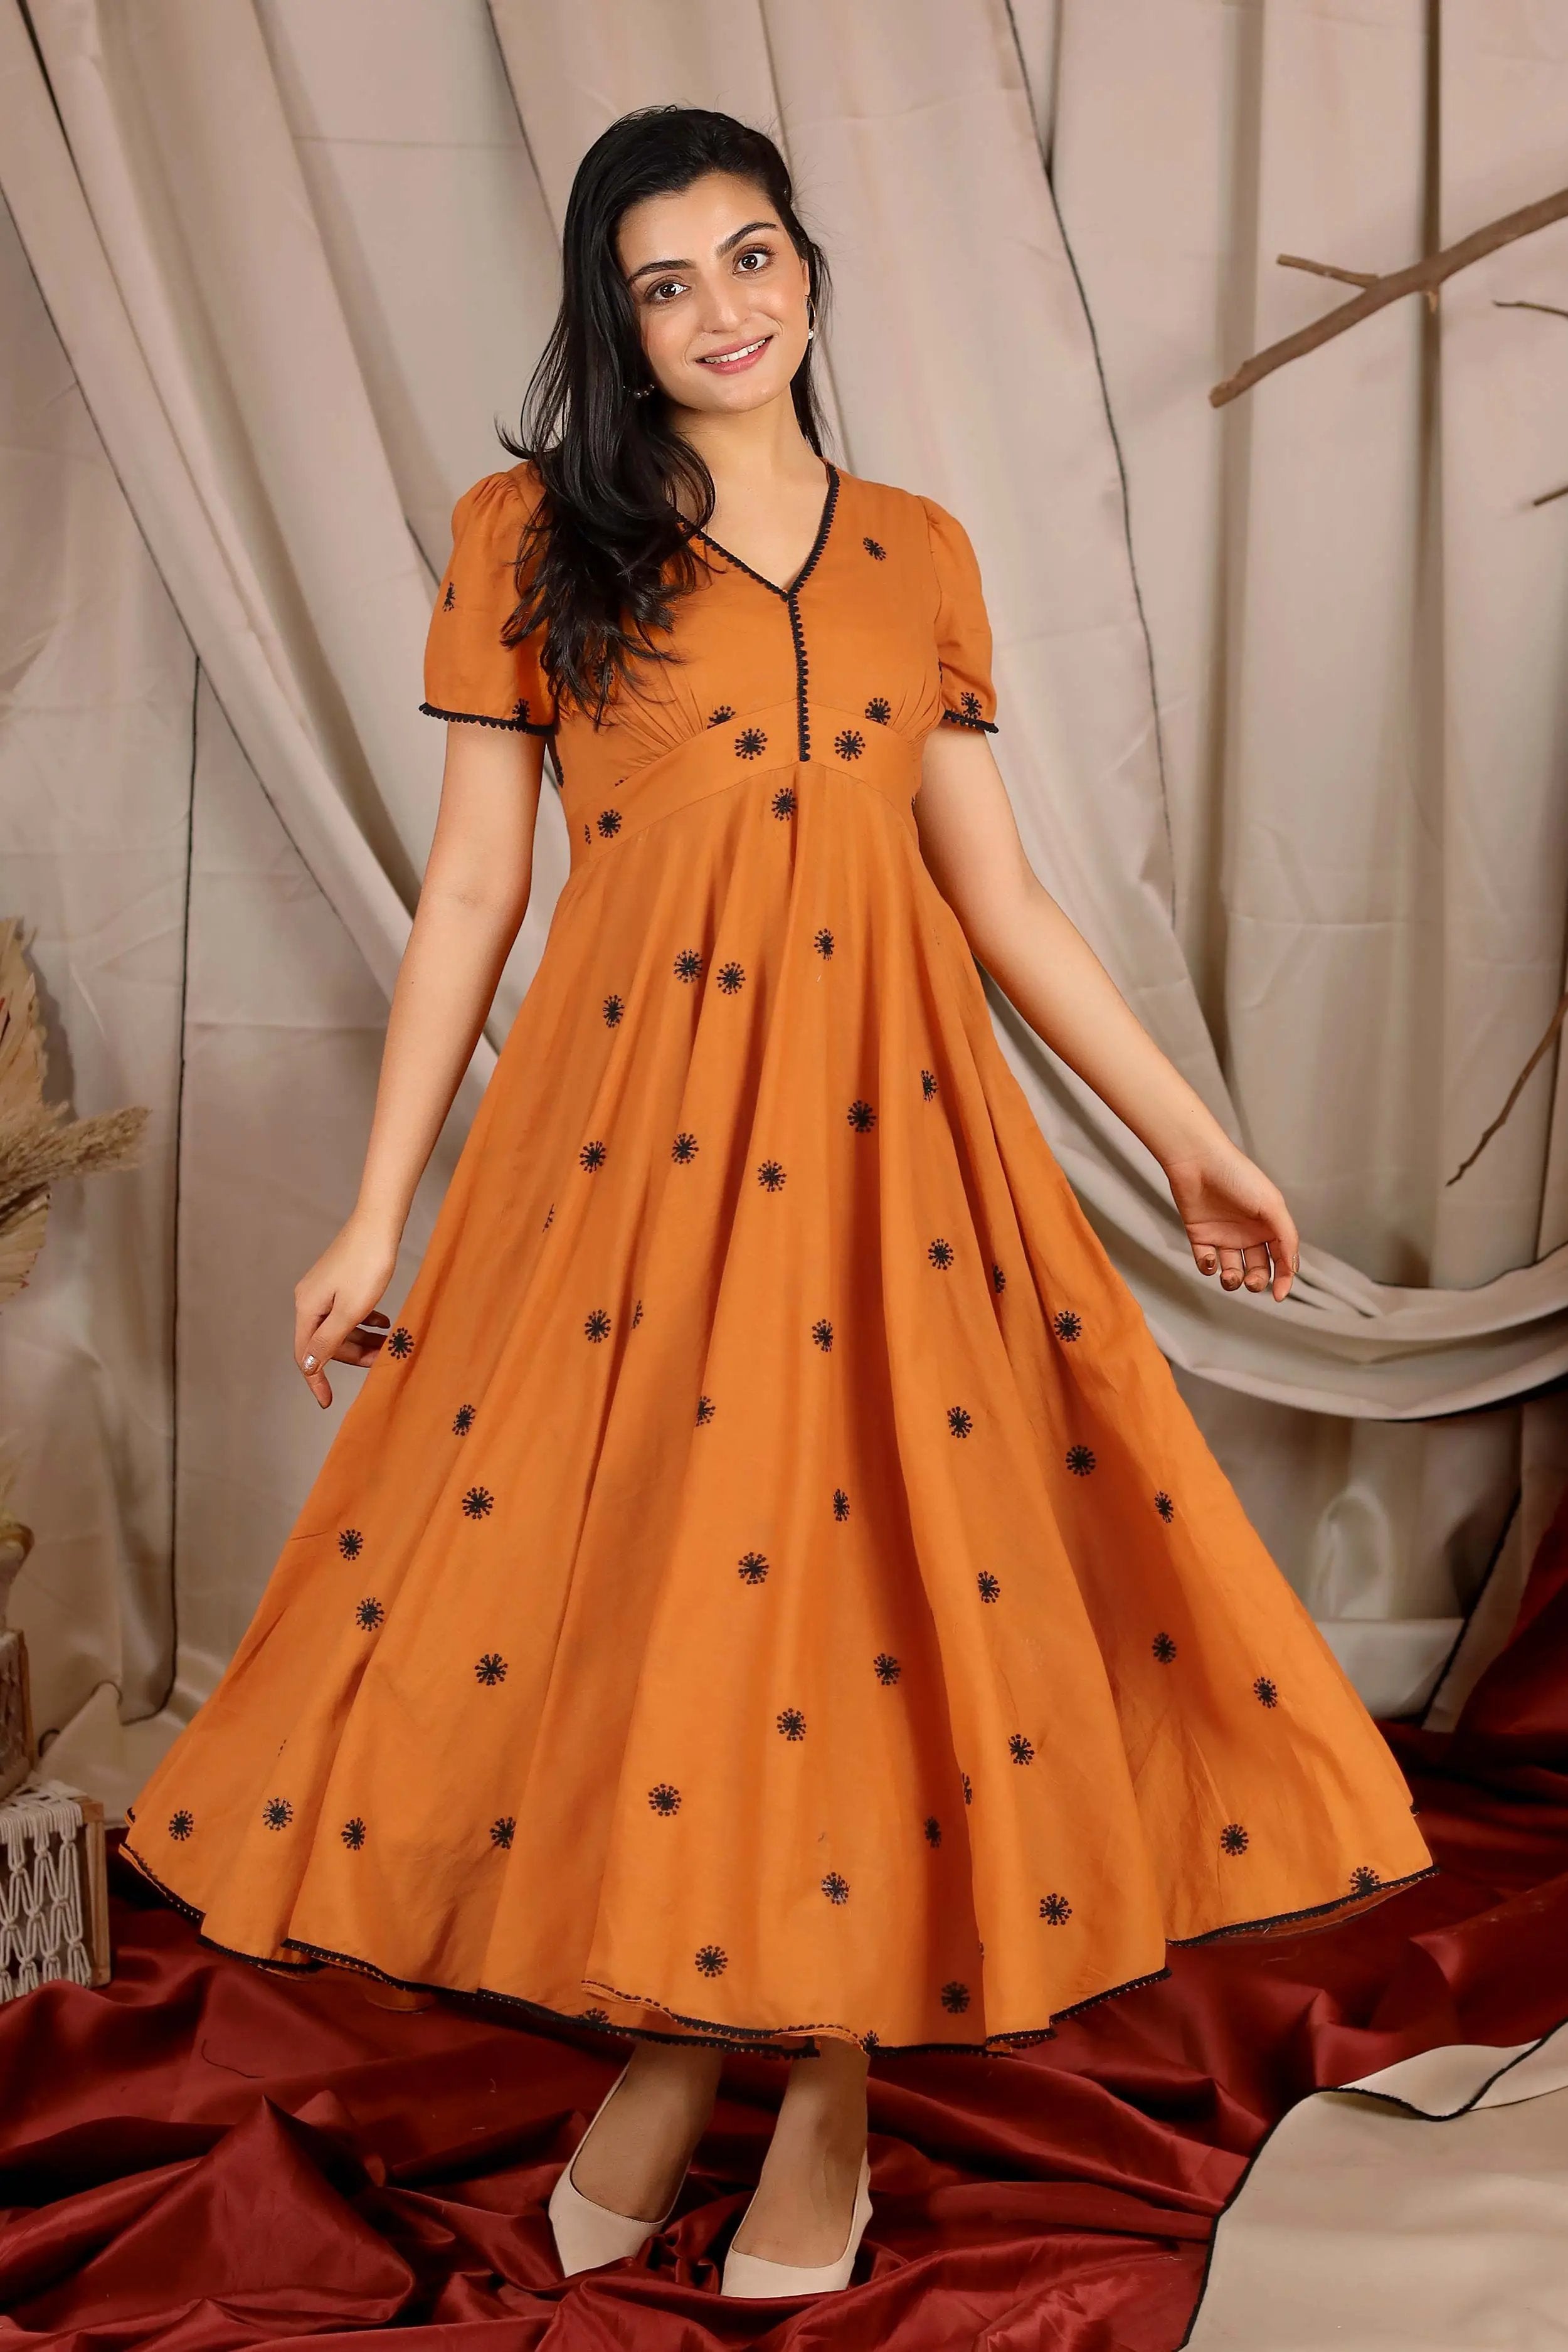 Apricot Summer Dress in Rust - Bullionknot